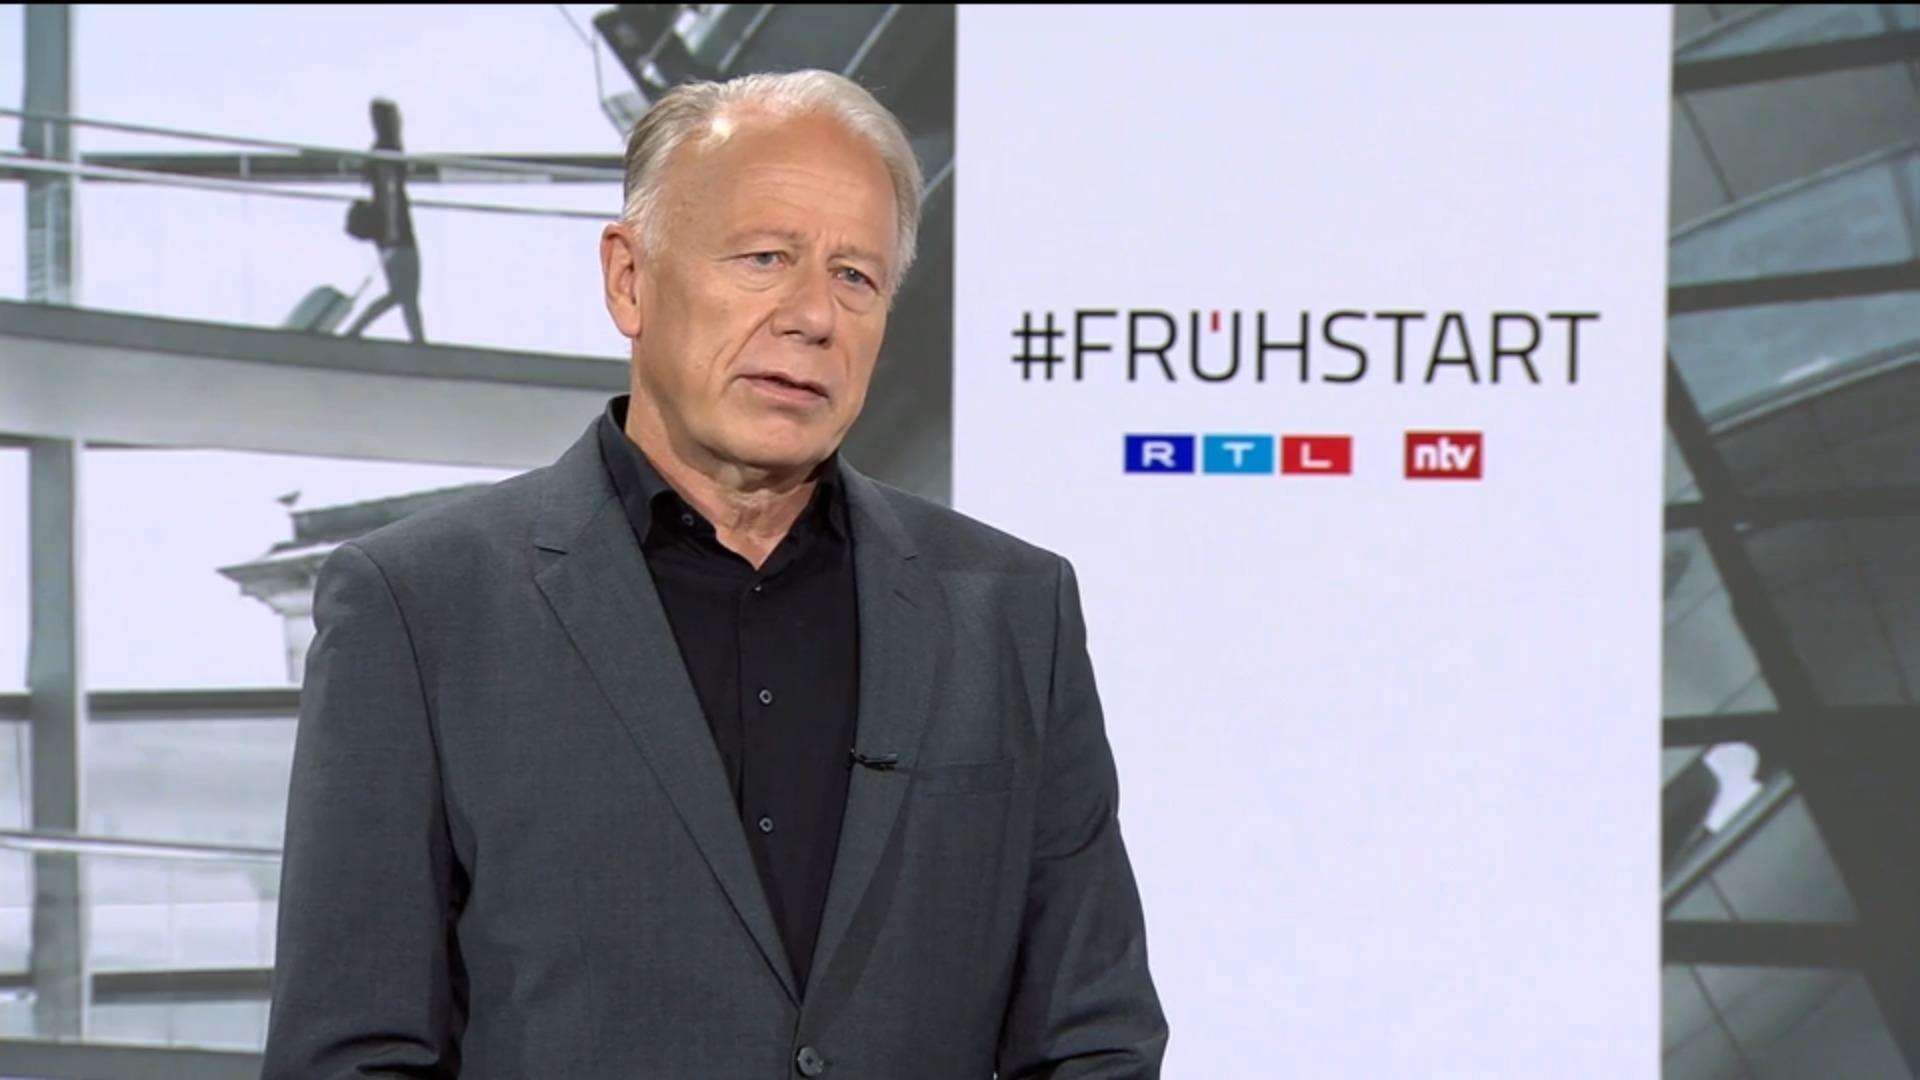 Tritin: "Ben Sicher, dat Oekraïne op sterven ligt, antwoordde Panzer Comcom" RTL/NTV Frühstart